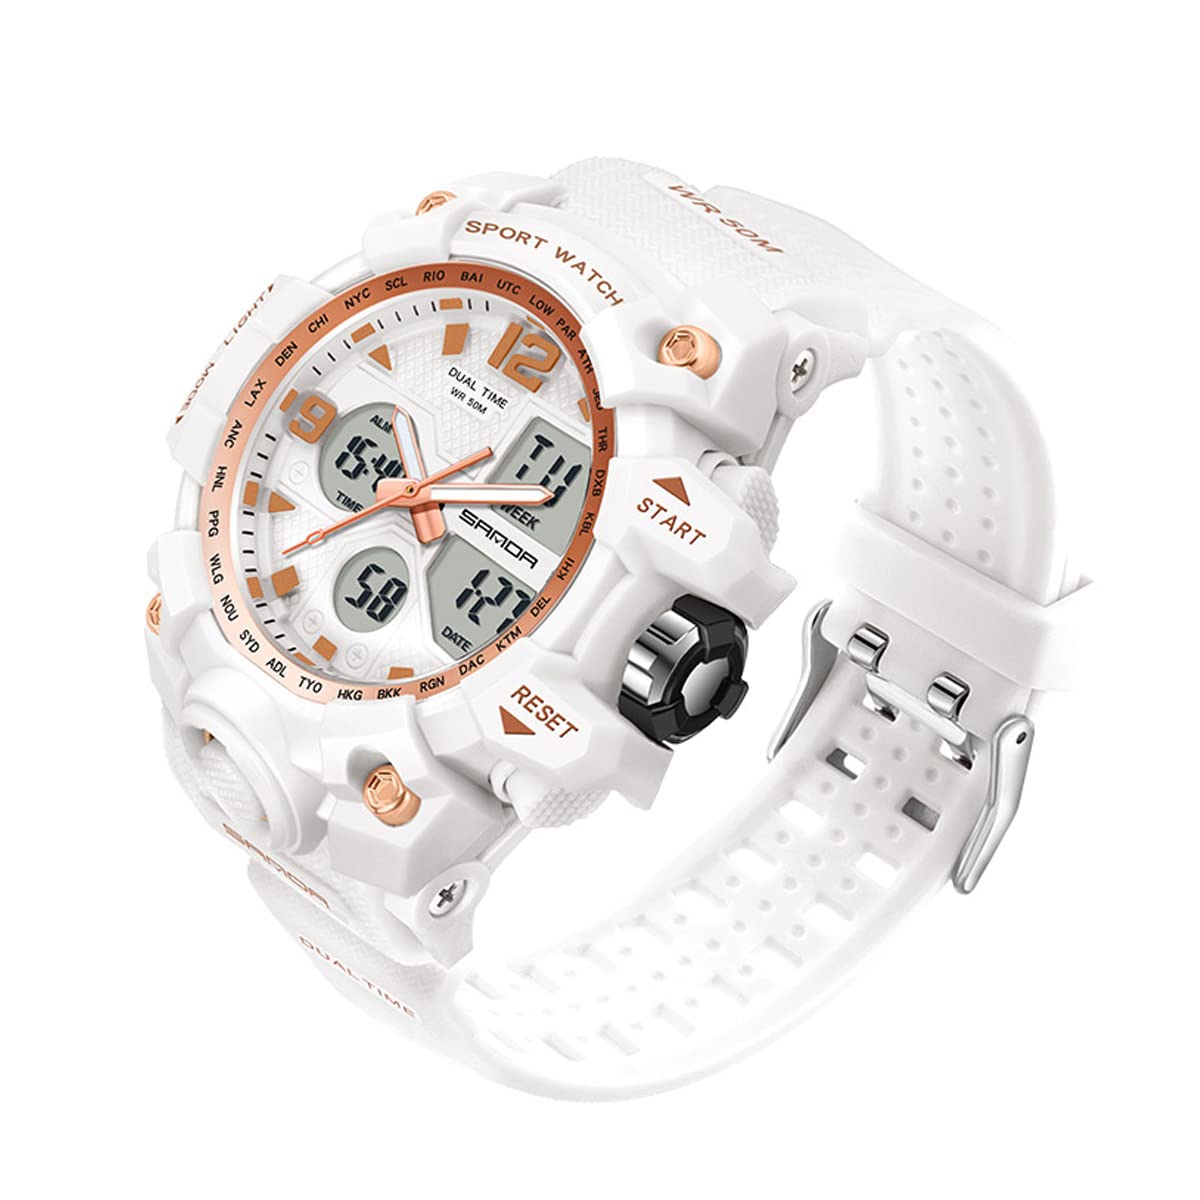 WISHFAN Women’s Digital Sports Watch, Dual-Display Waterproof Wrist Watch with Alarm and Stopwatch